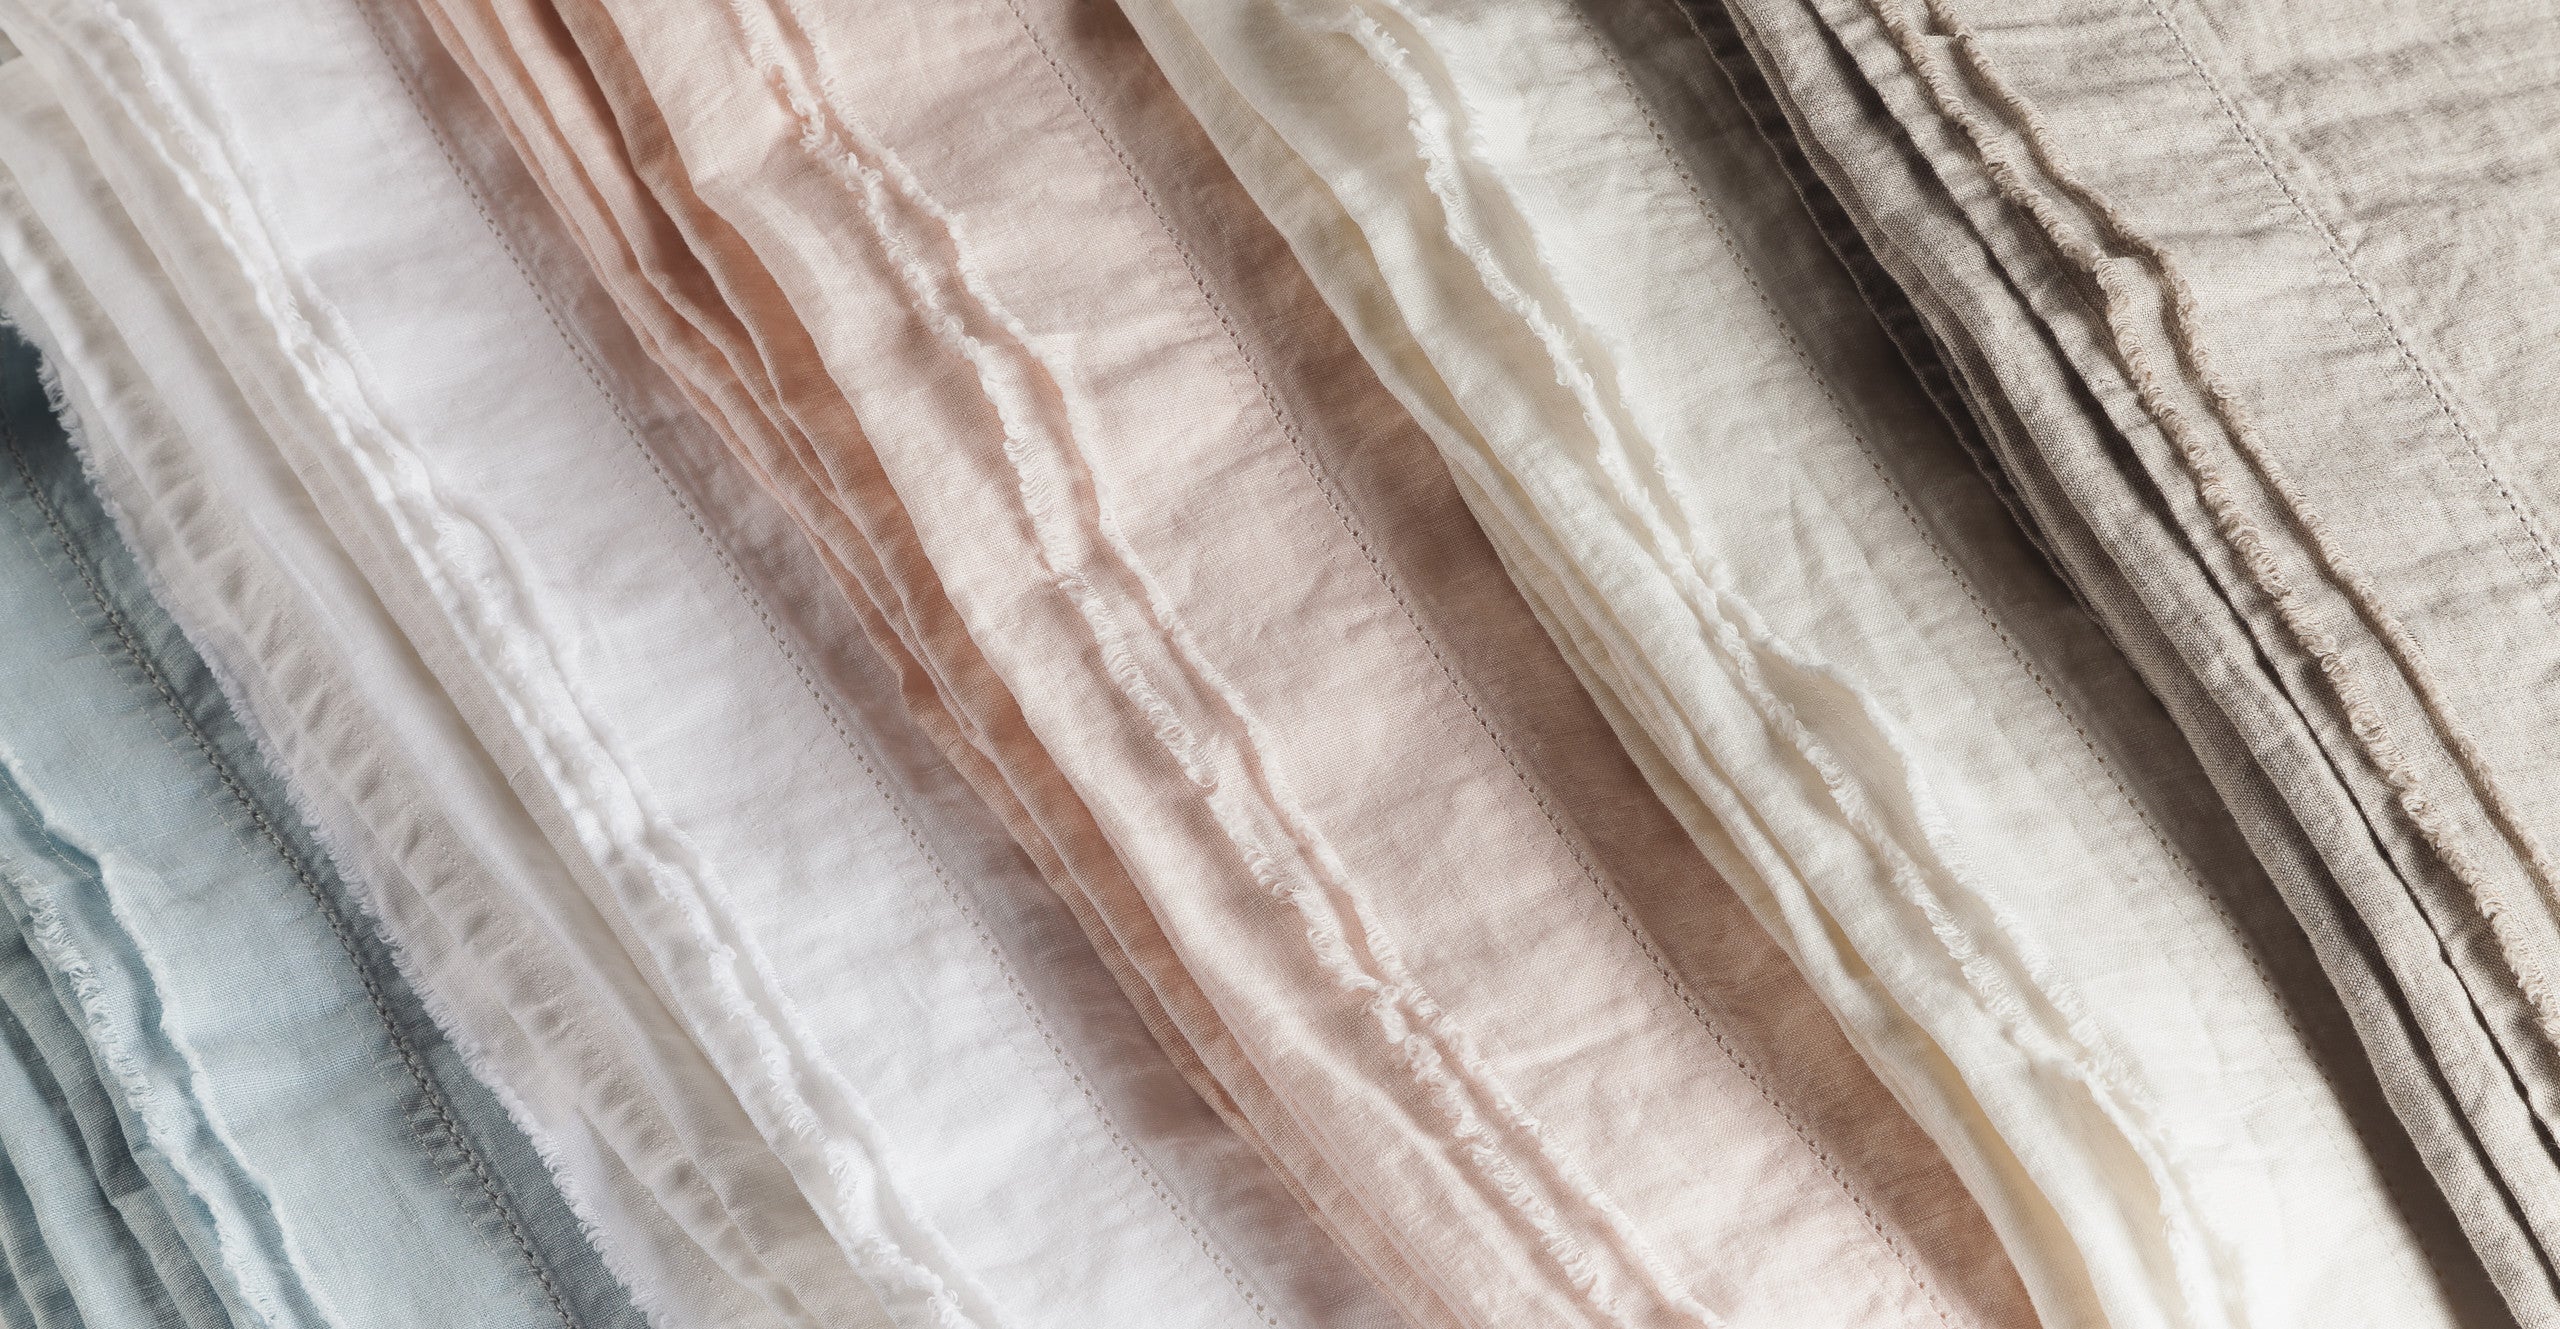 Linen Flat Sheet - Soft Washed